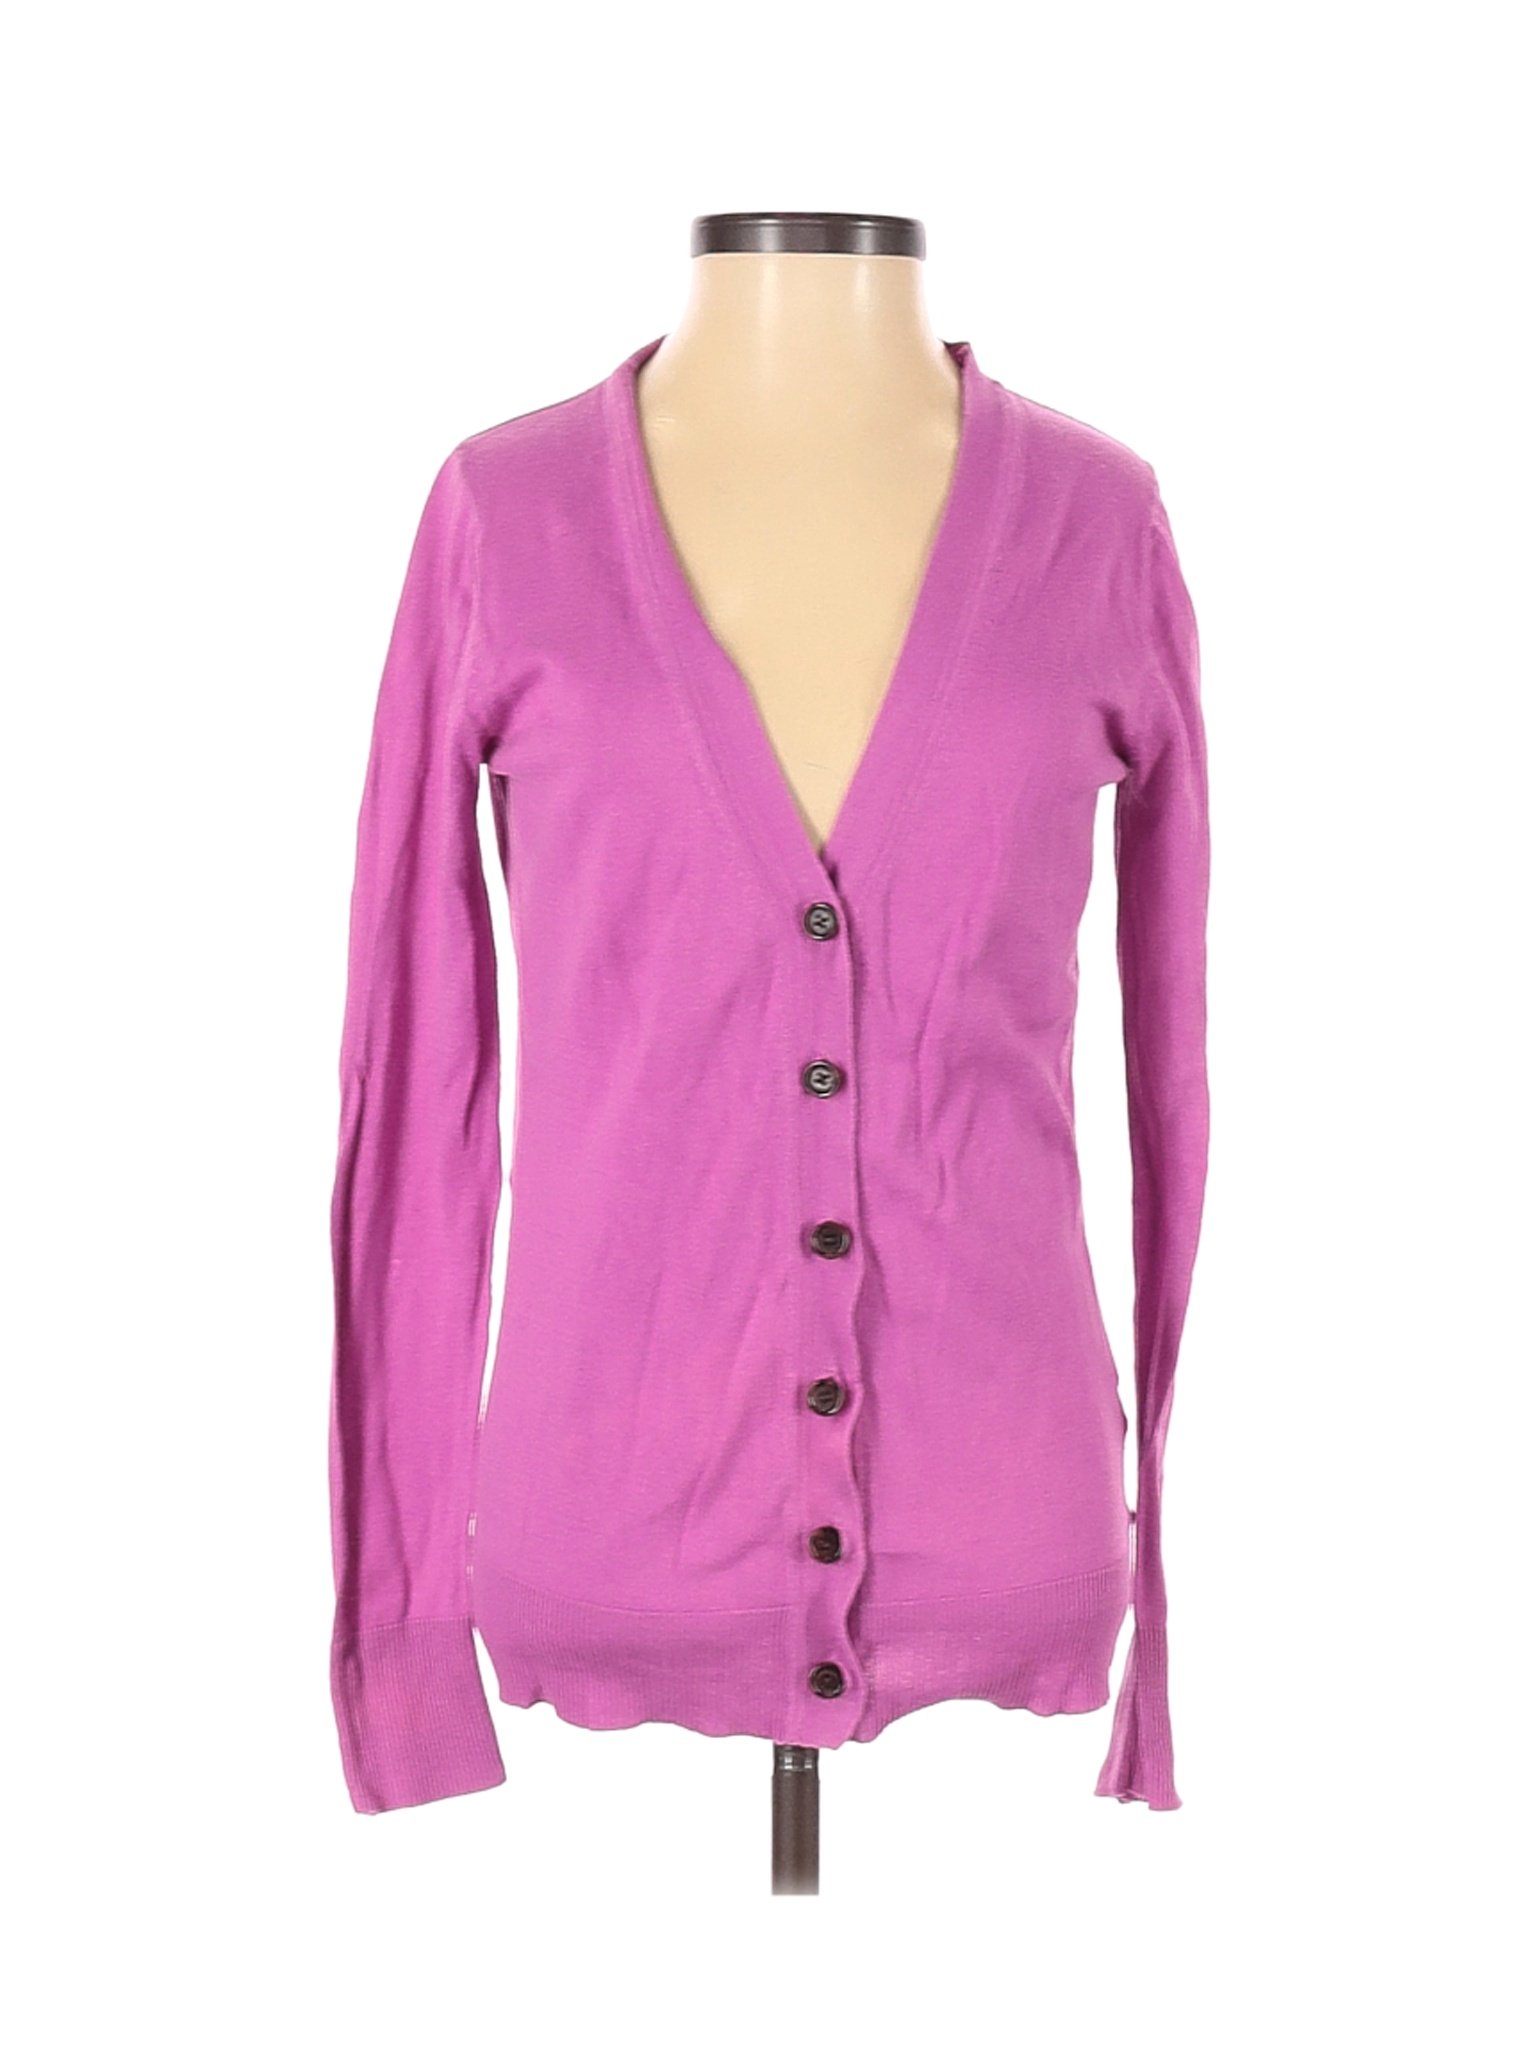 Gap Women Purple Cardigan XS | eBay